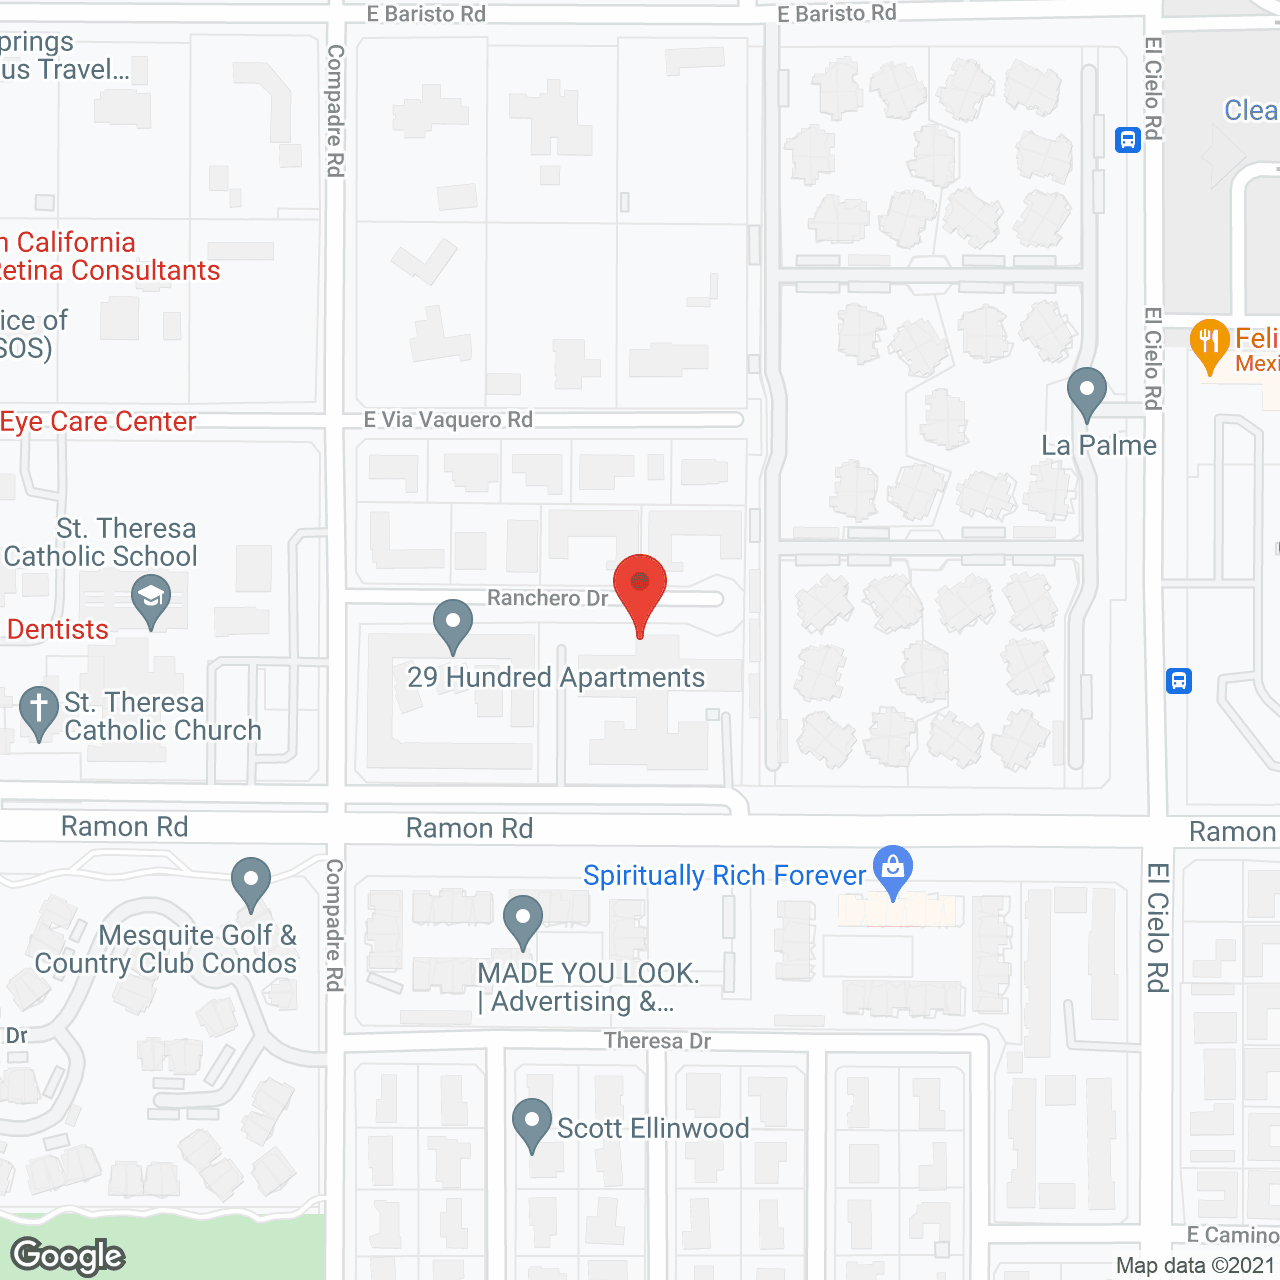 Premier Care Center for Palm Springs in google map